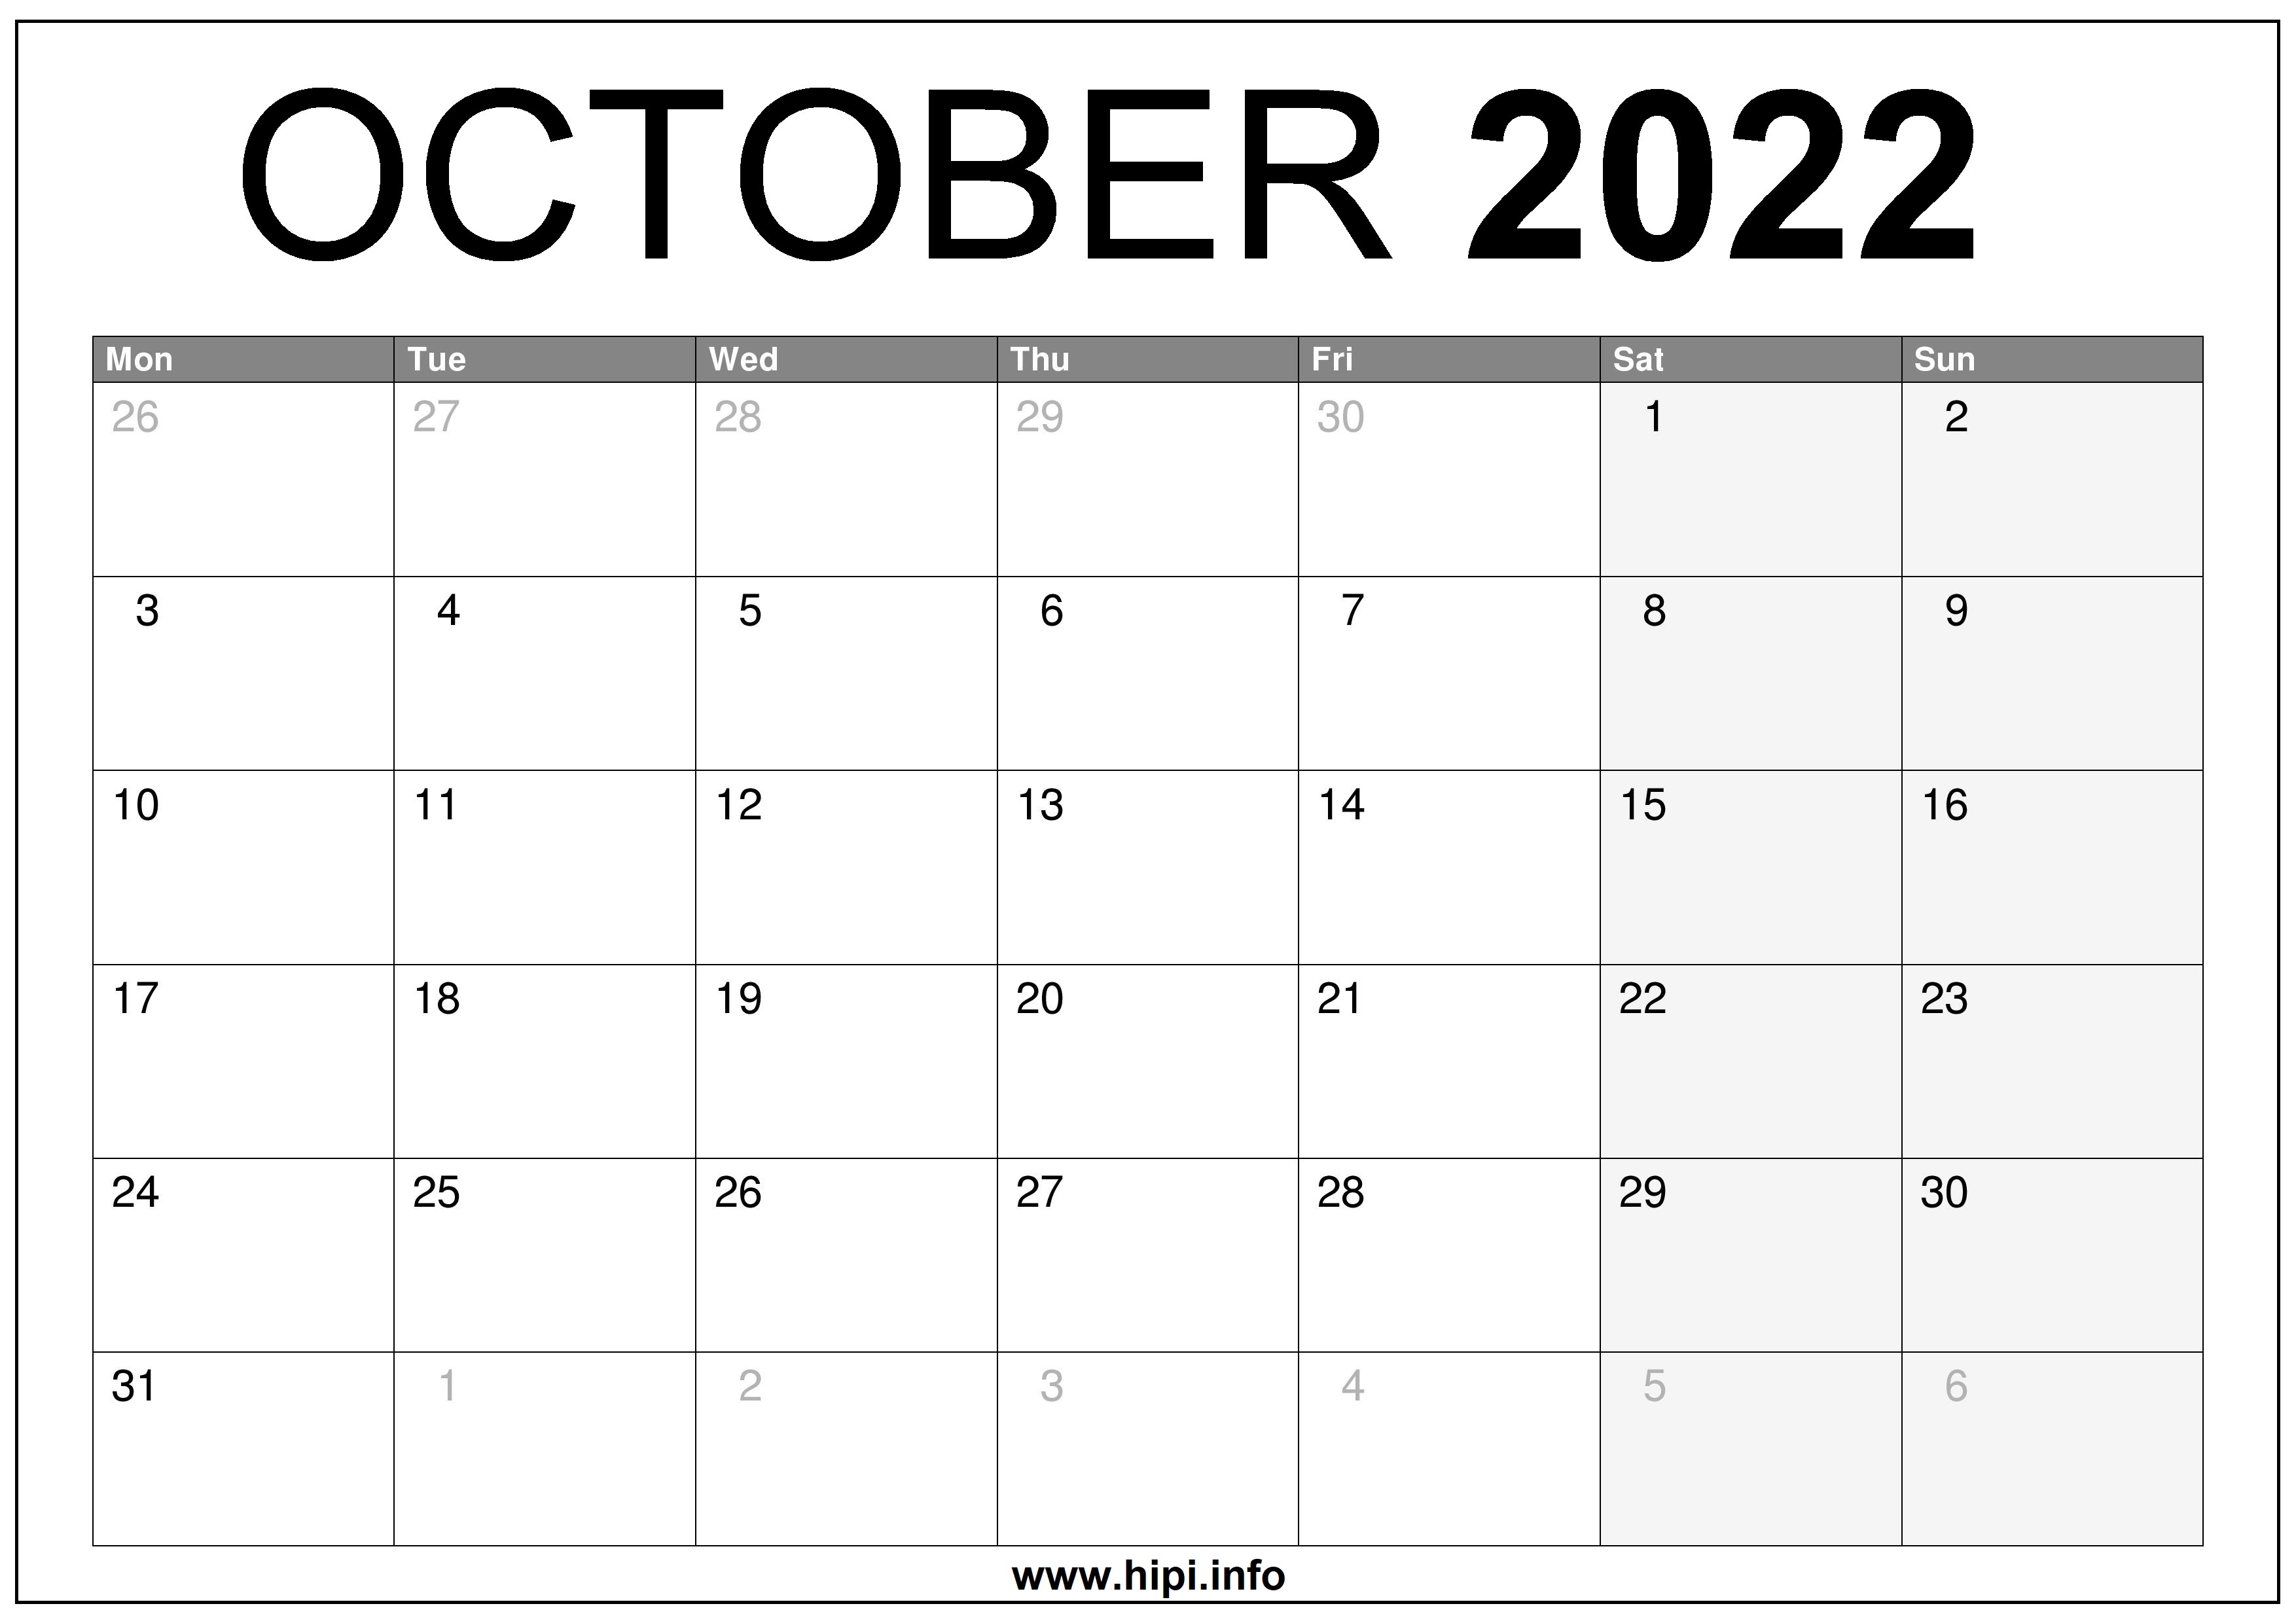 October 2022 Monthly Calendar October 2022 Uk Calendar Printable Free - Hipi.info | Calendars Printable  Free